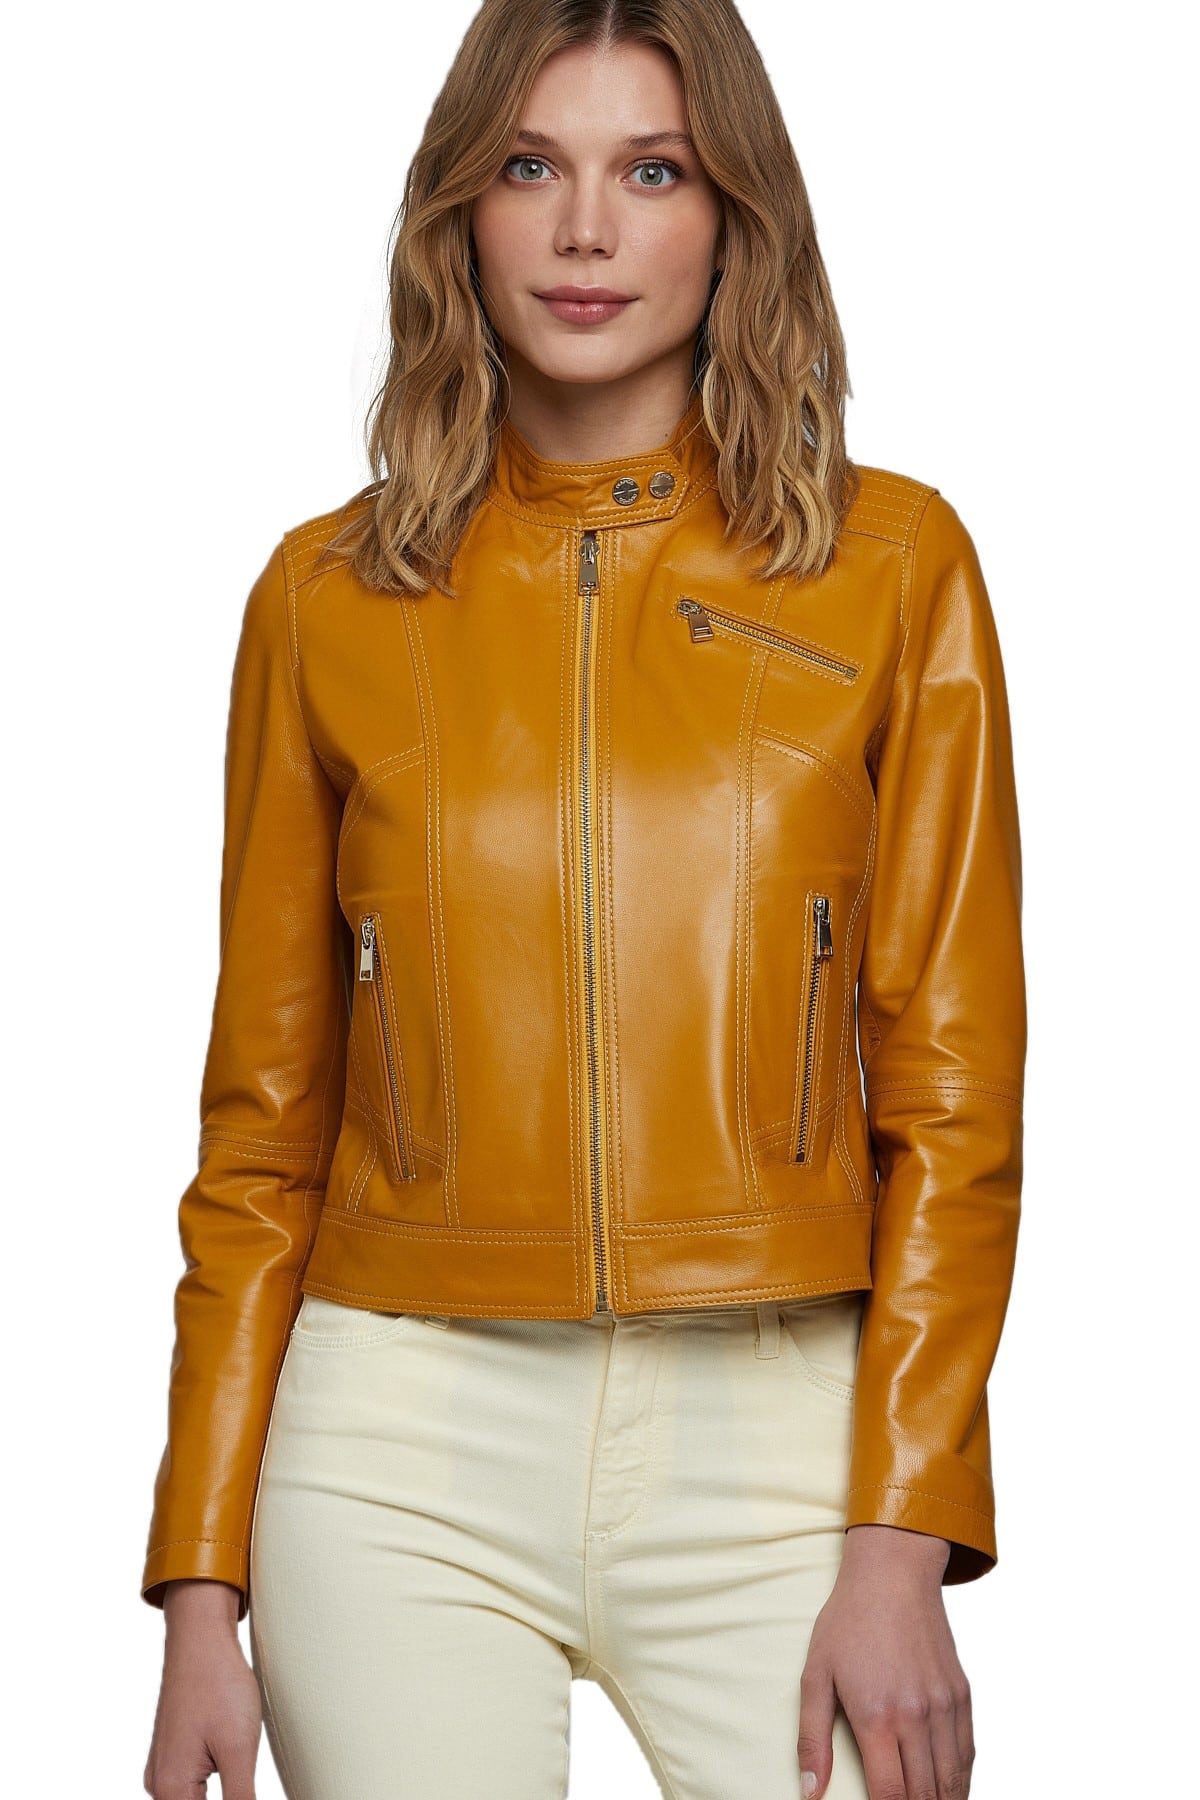 Rosie Huntington Women's 100 % Real Windsor Tan Leather Biker Style Jacket